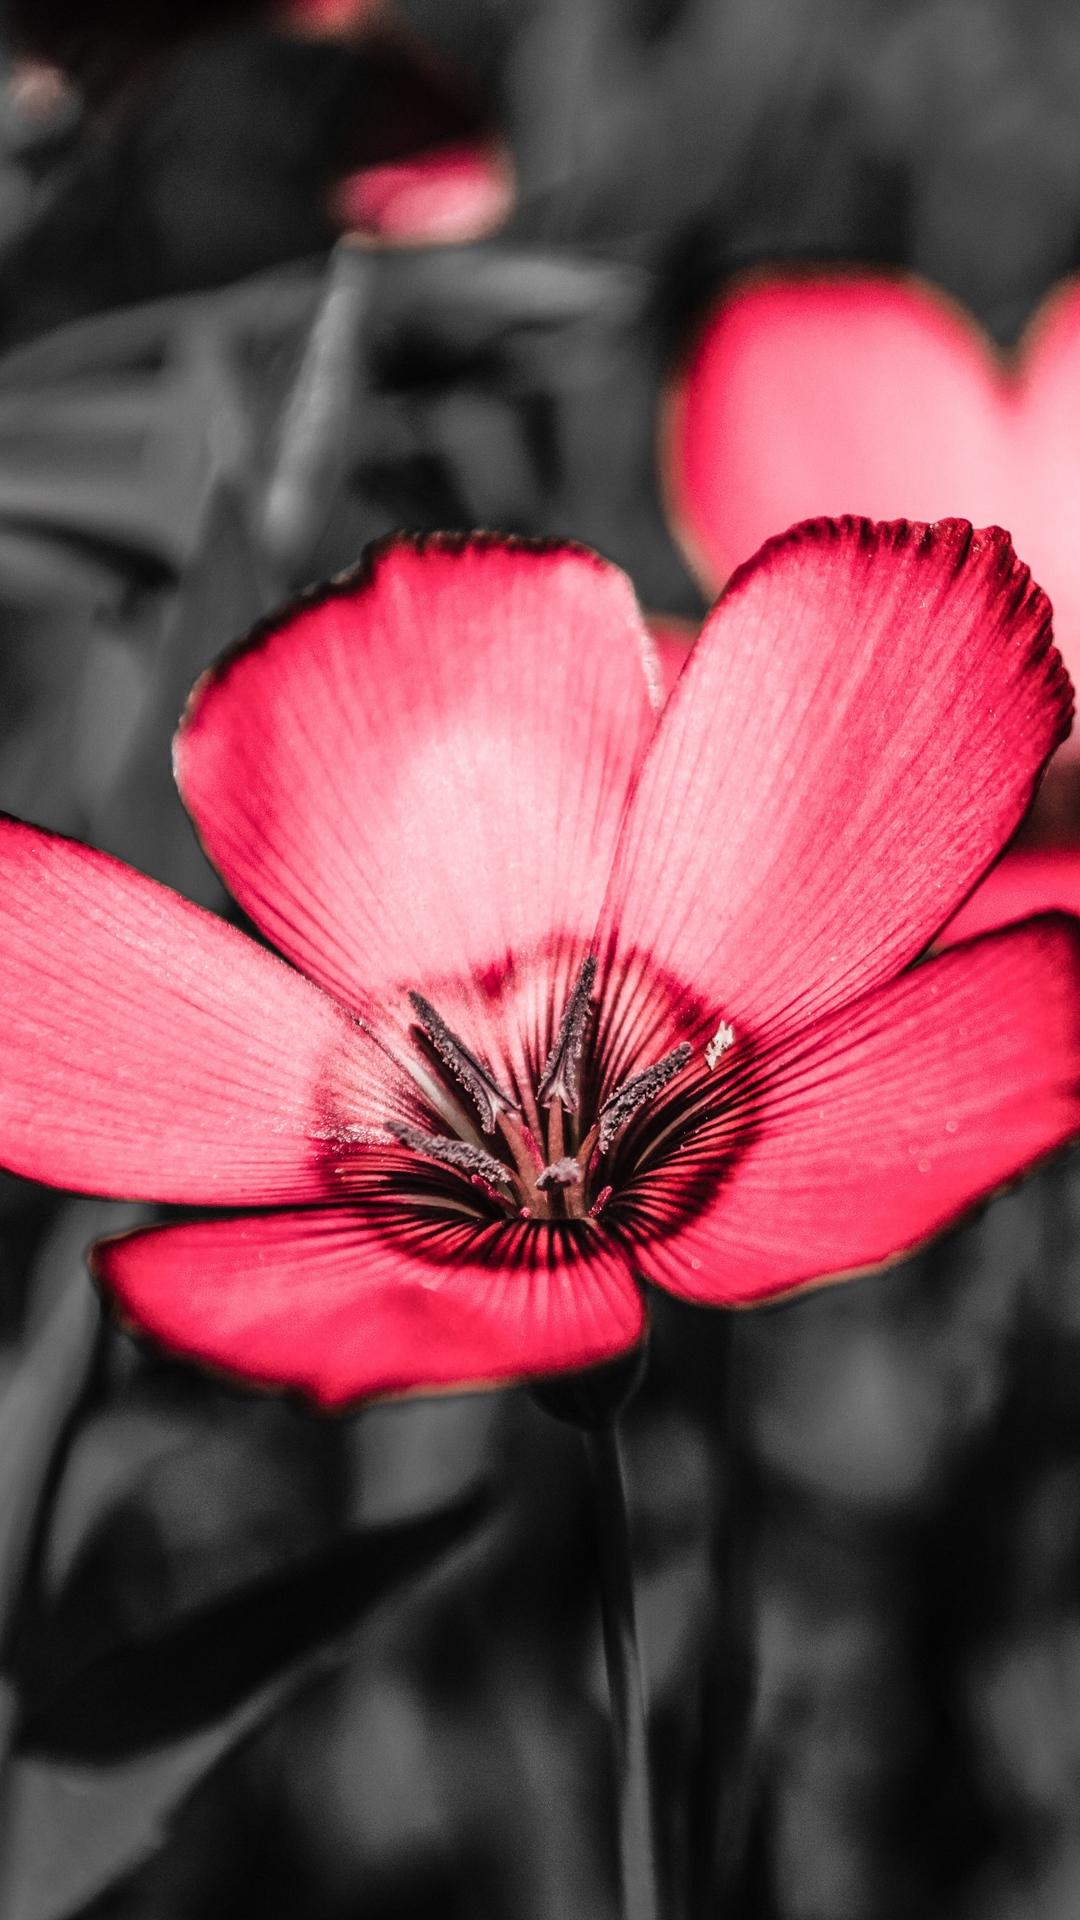 Download wallpaper 1080x1920 flower, pink, petals, contrast samsung